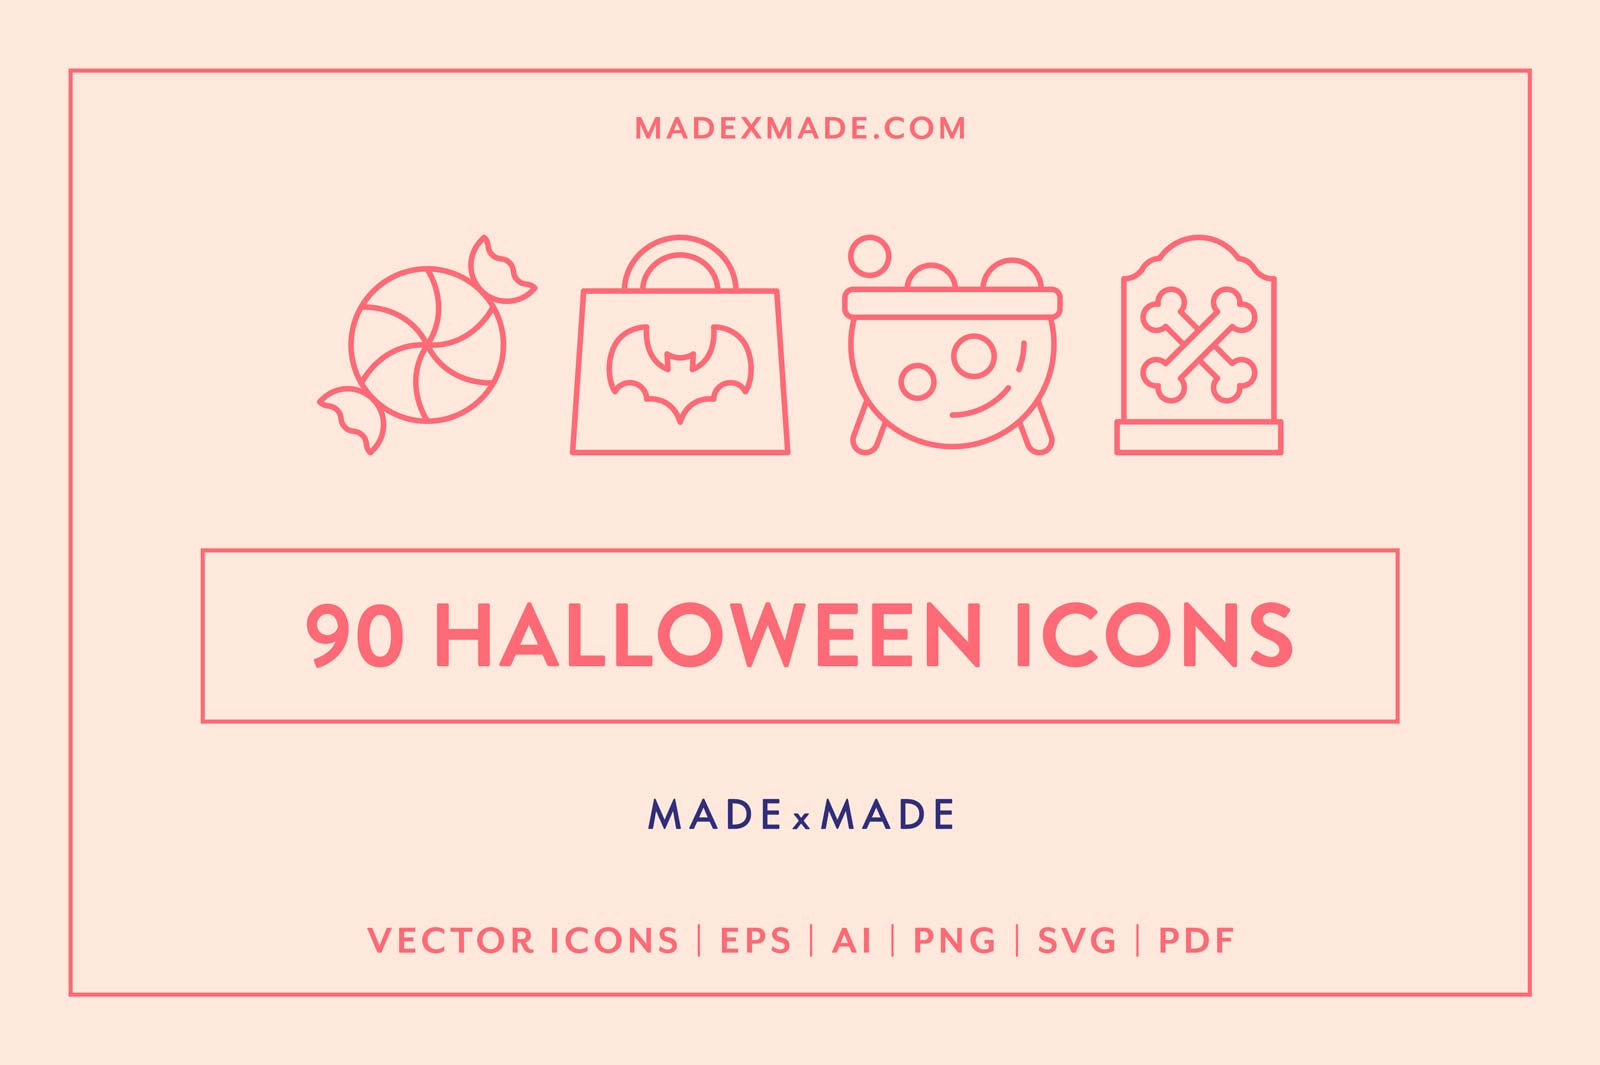 made x made icons halloween